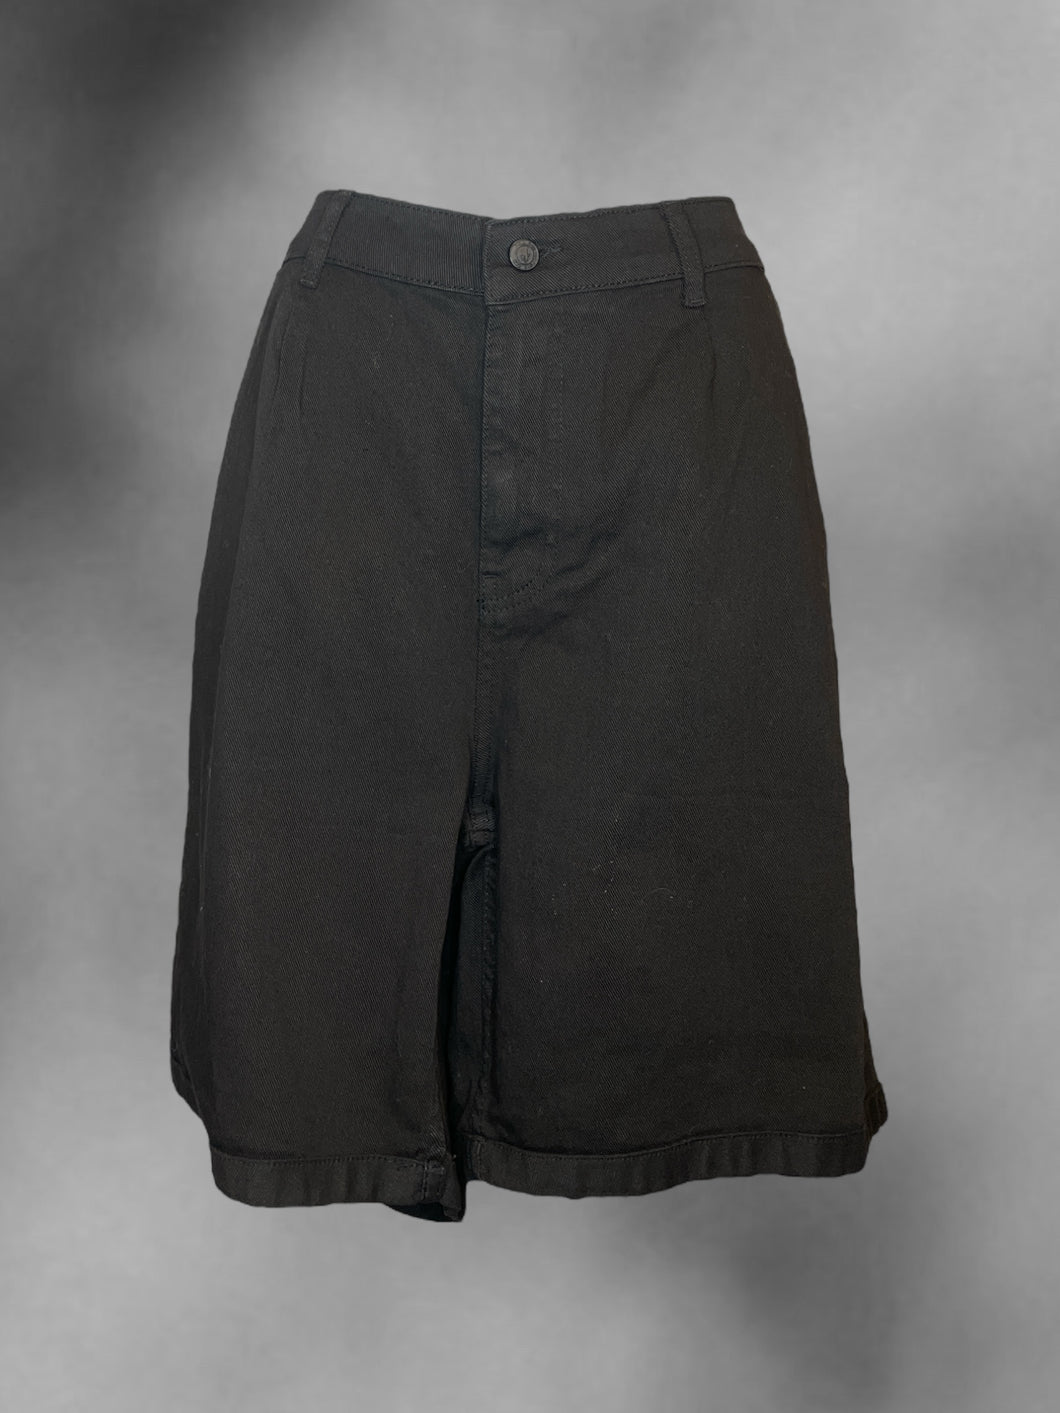 0X Black shorts w/ belt loops, pockets, & zipper/button closure